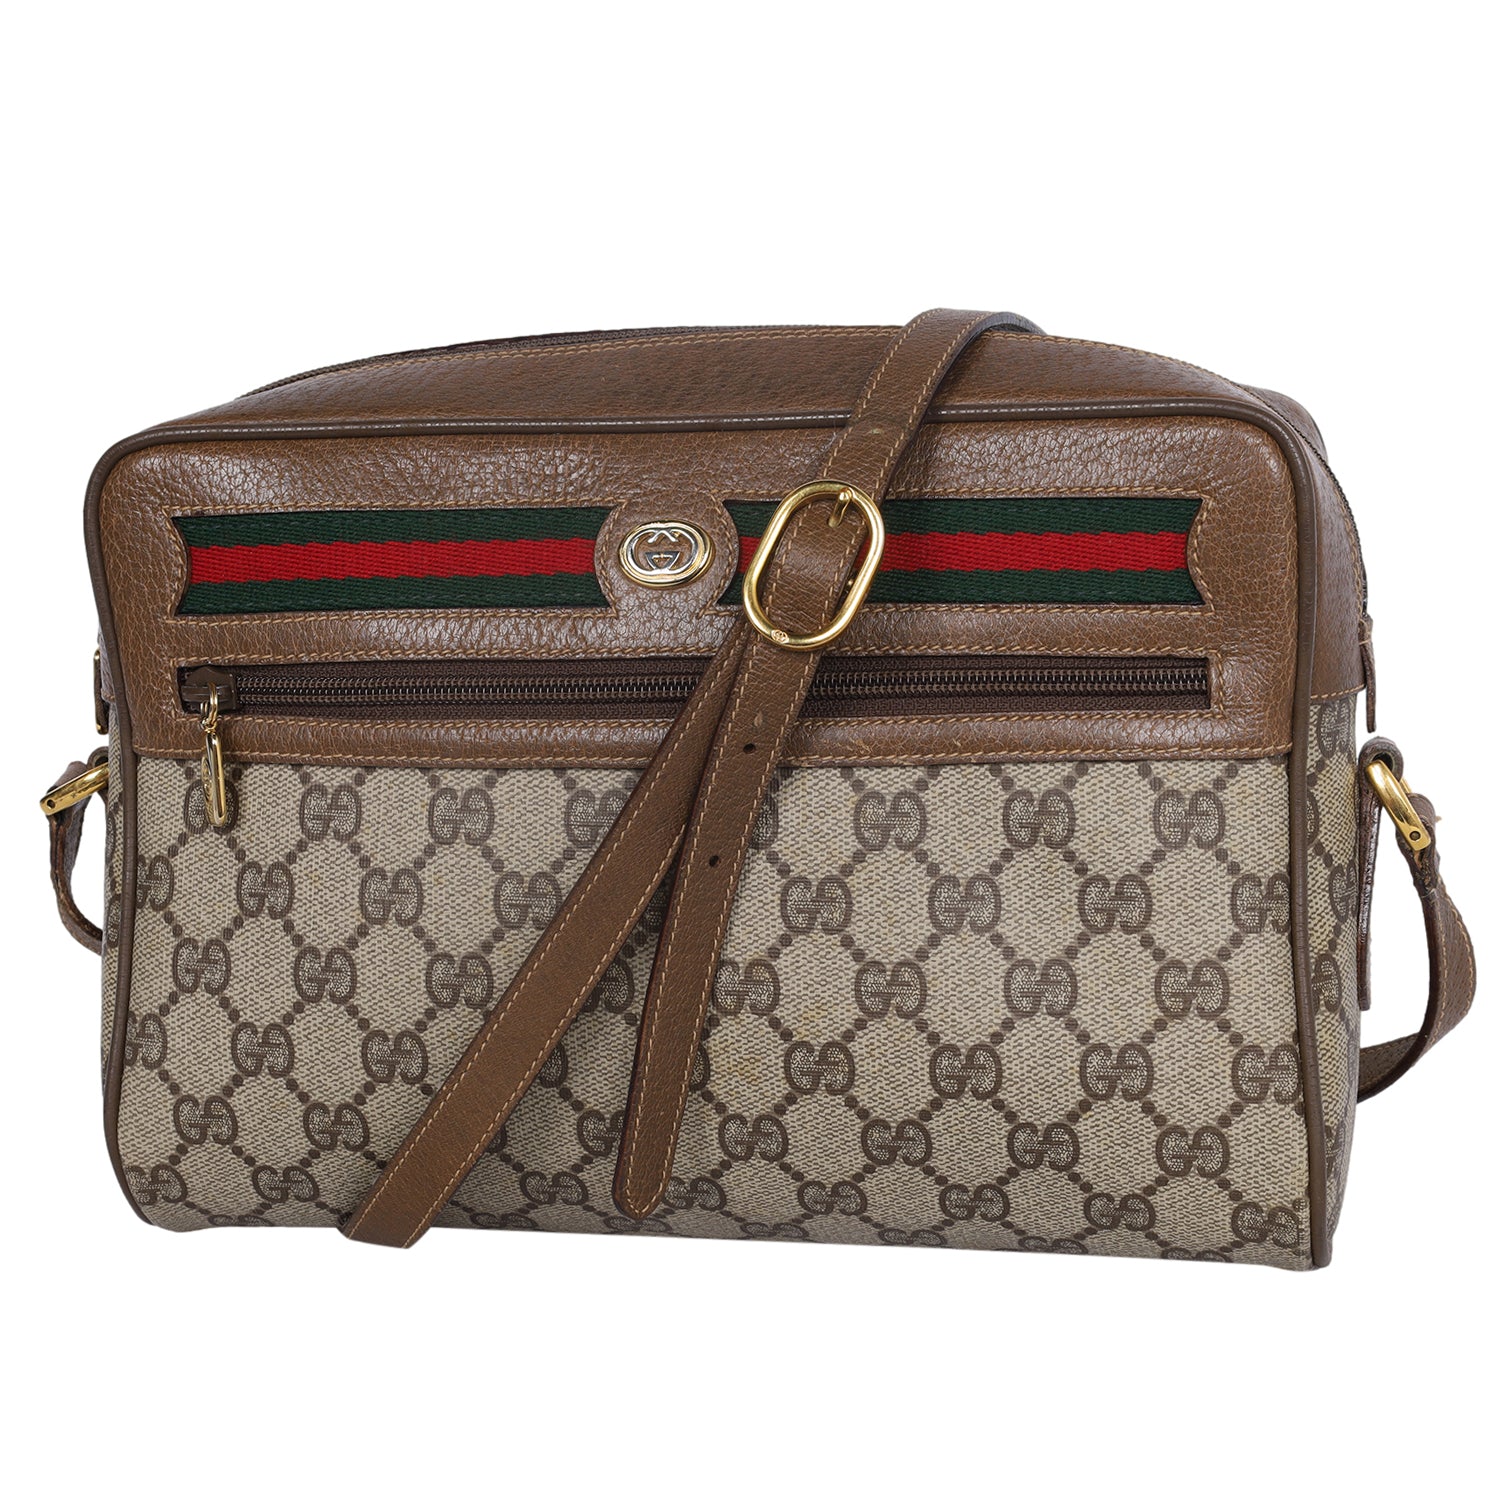 Gucci Ophidia GG Supreme Crossbody Bag